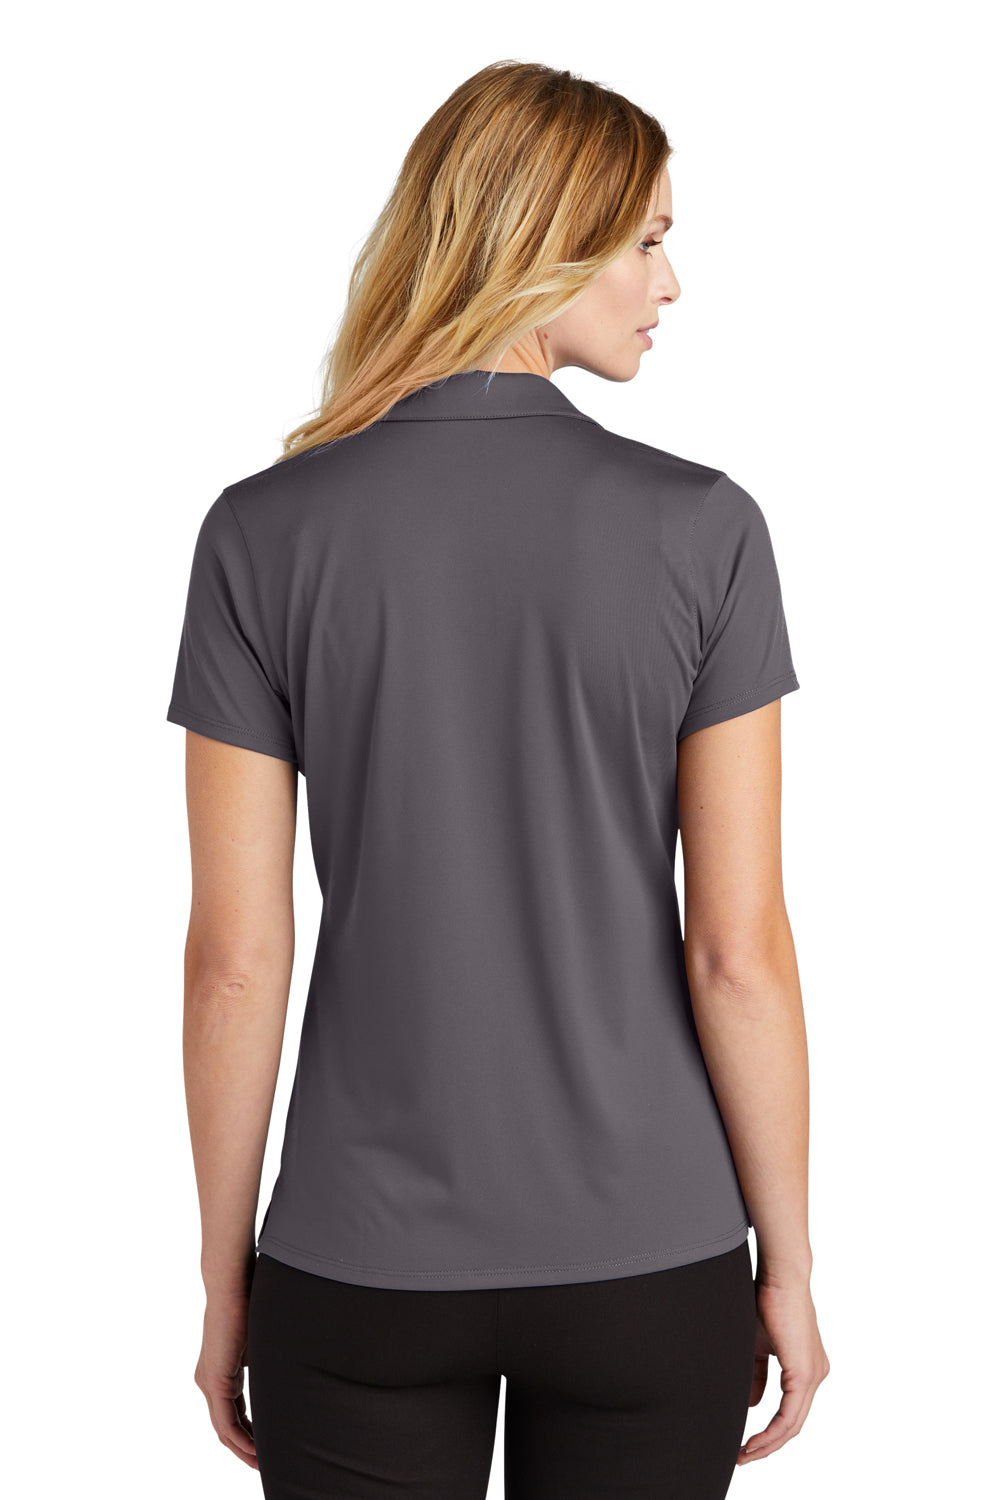 Port Authority LK398 Performance Staff Short Sleeve Polo Shirt Graphite Grey Back